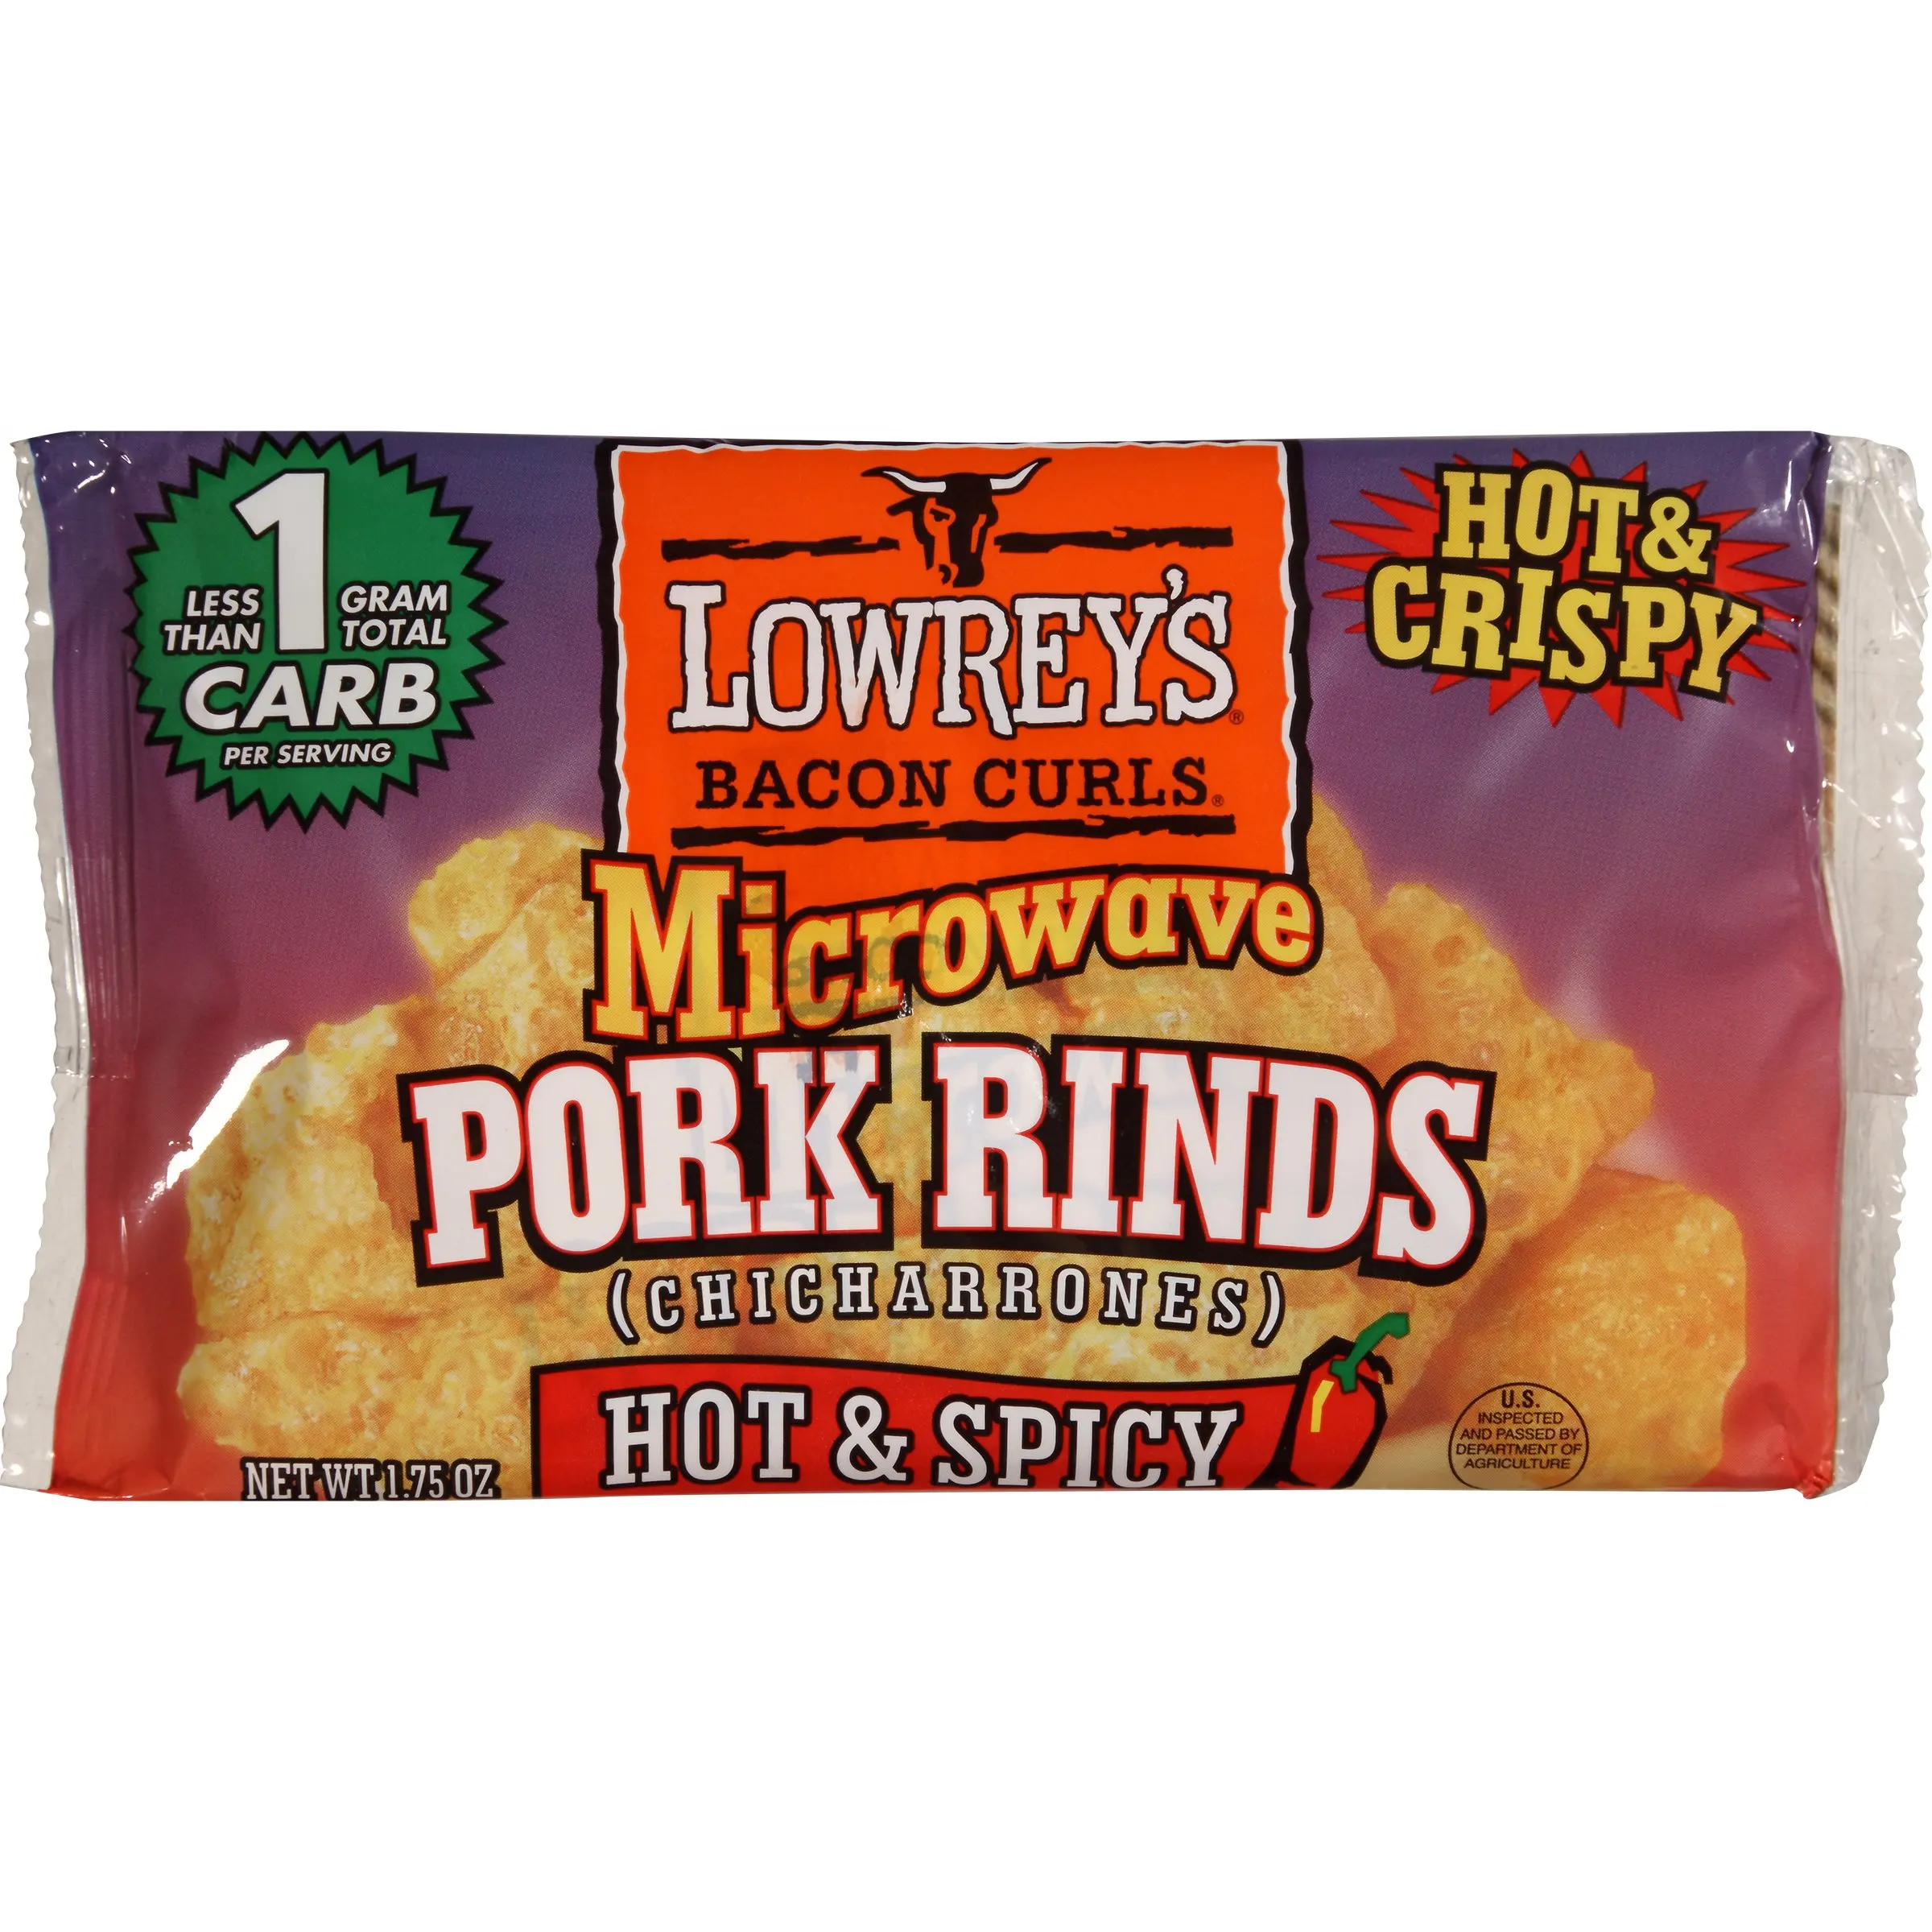 18.99. Lowrey's Bacon Curls Microwave Pork Rinds (Chicharrones), Hot &...